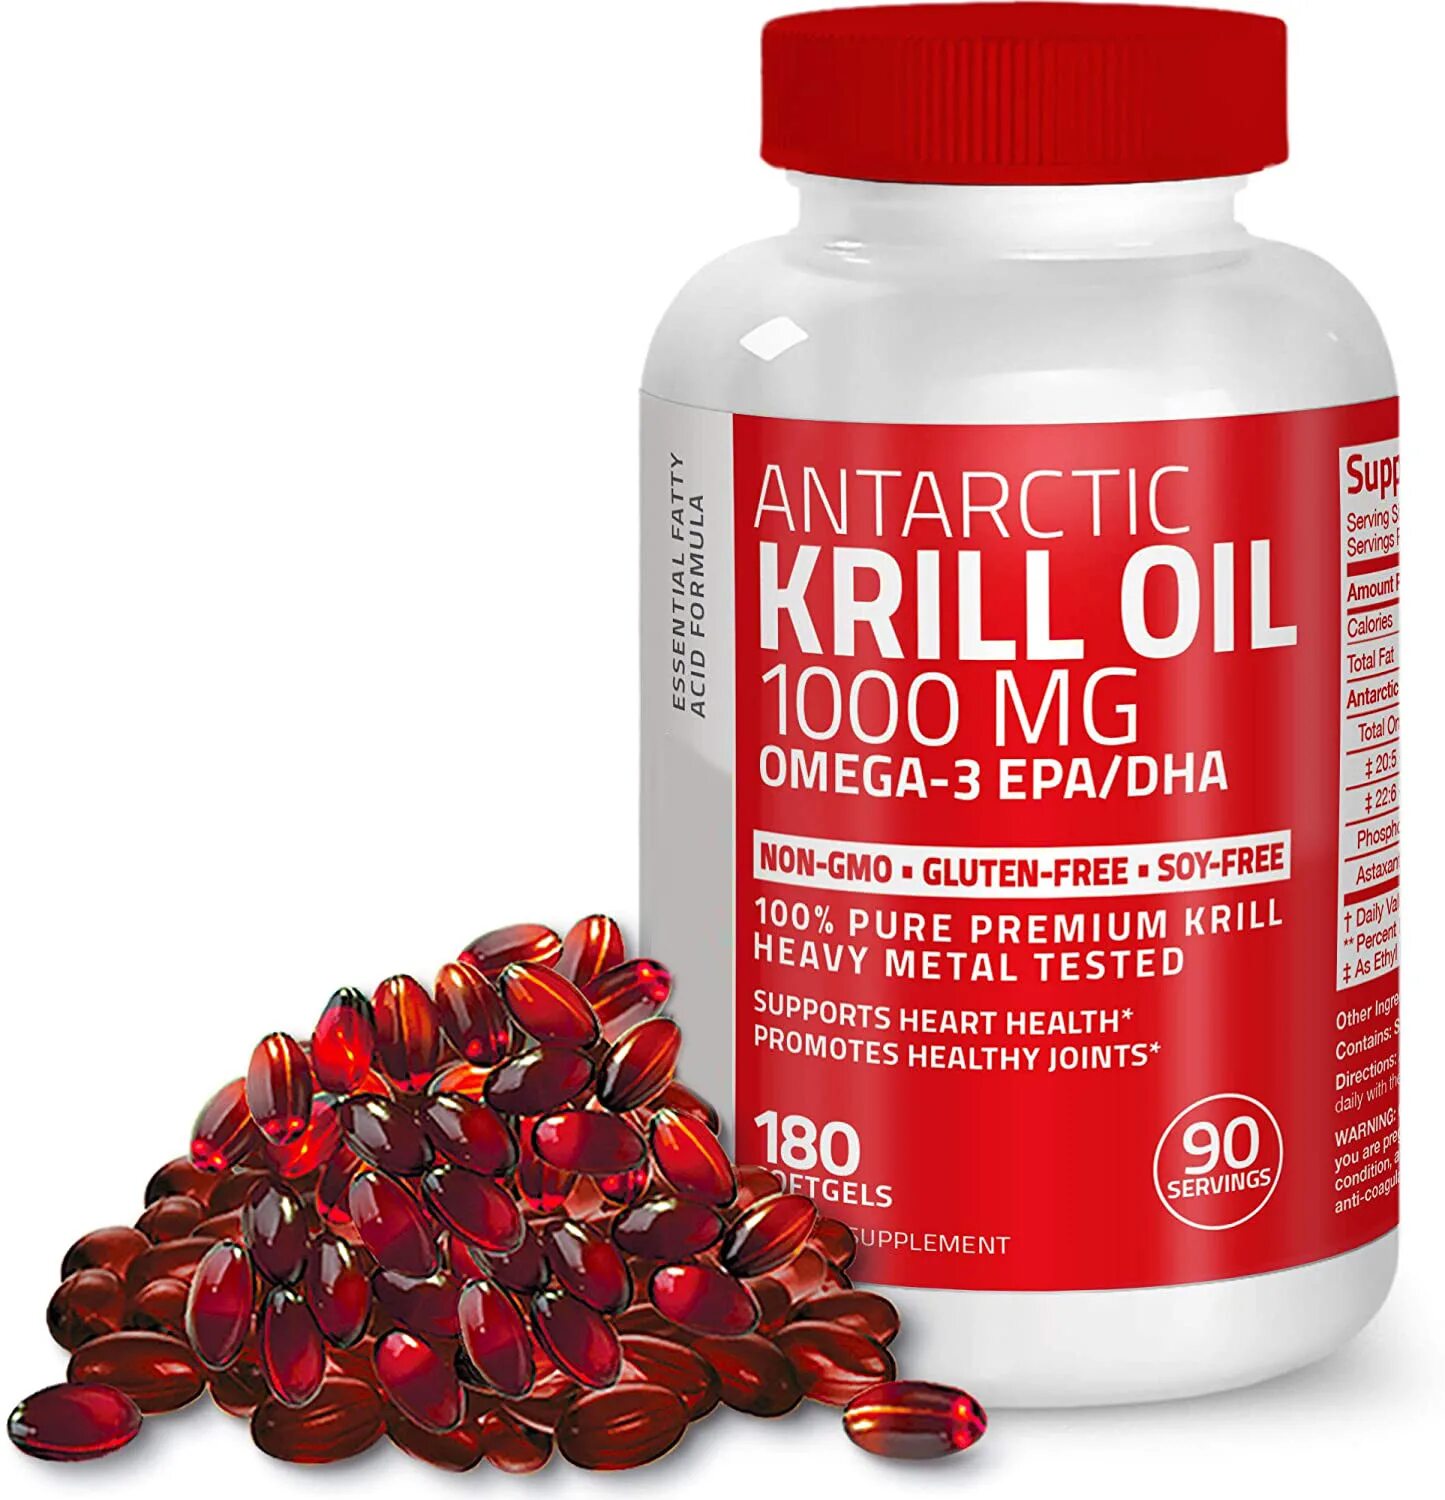 Omega 3 капсулы купить. Krill Oil Omega 3. Antarctic Krill Oil 1000mg. Омега 3 DHA EPA 1000 мг. Krill Oil капсулы.